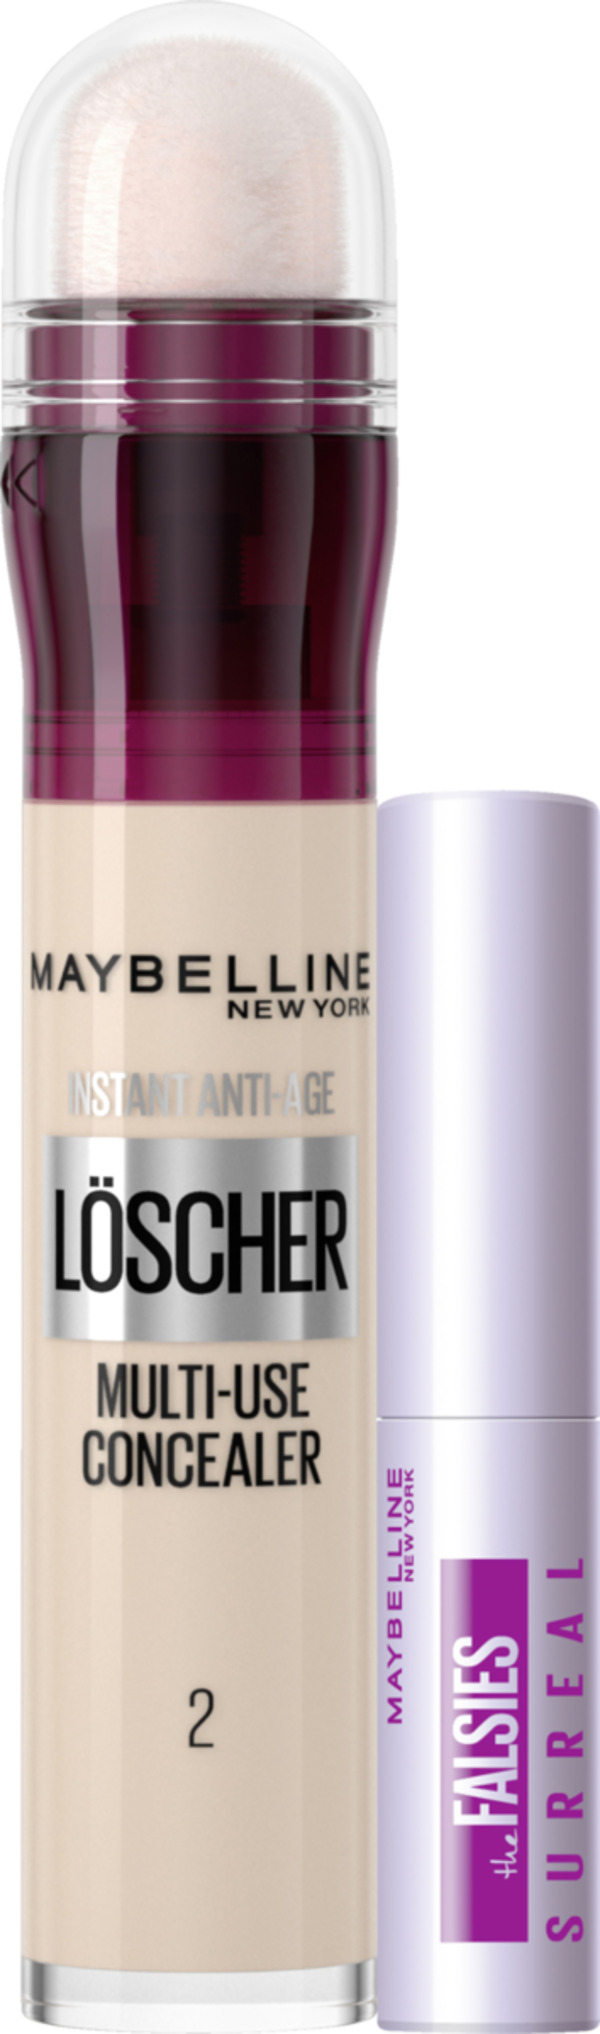 Bild 1 von Maybelline New York Make-up-Set: Instant Anti-Age Löscher Concealer 02 Nude + Mini Falsies Surreal Extensions Mascara